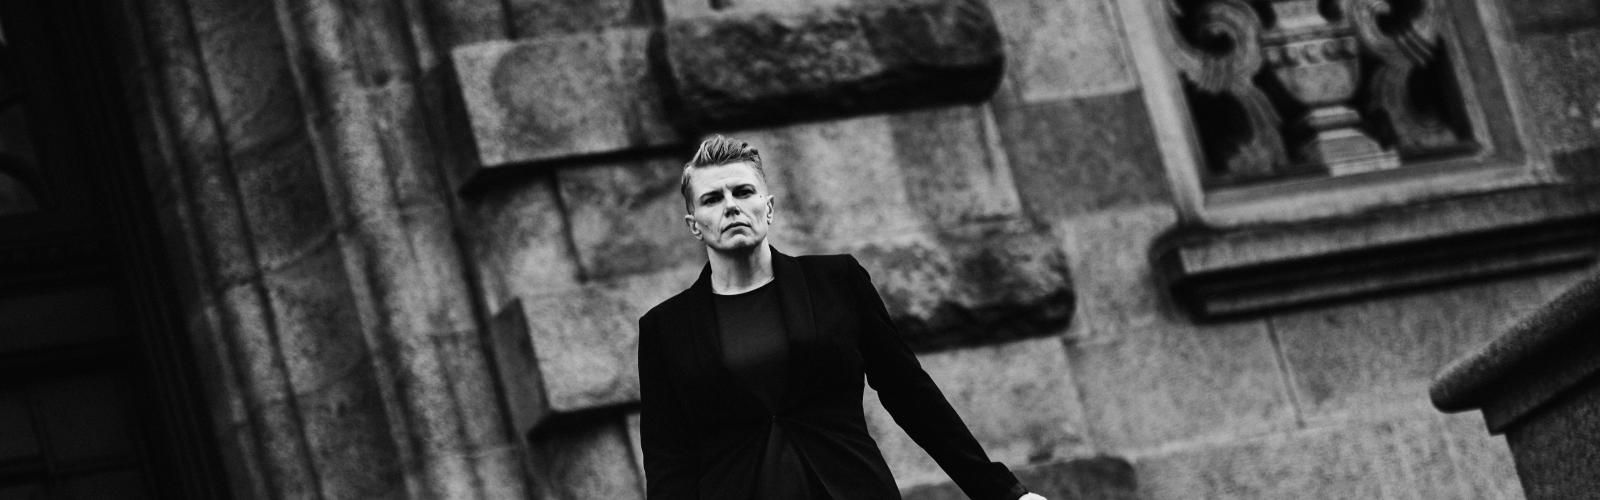 Jeanette Bauer, chef for Kirkens Korshær, på vej ned ad trappen på Christiansborg